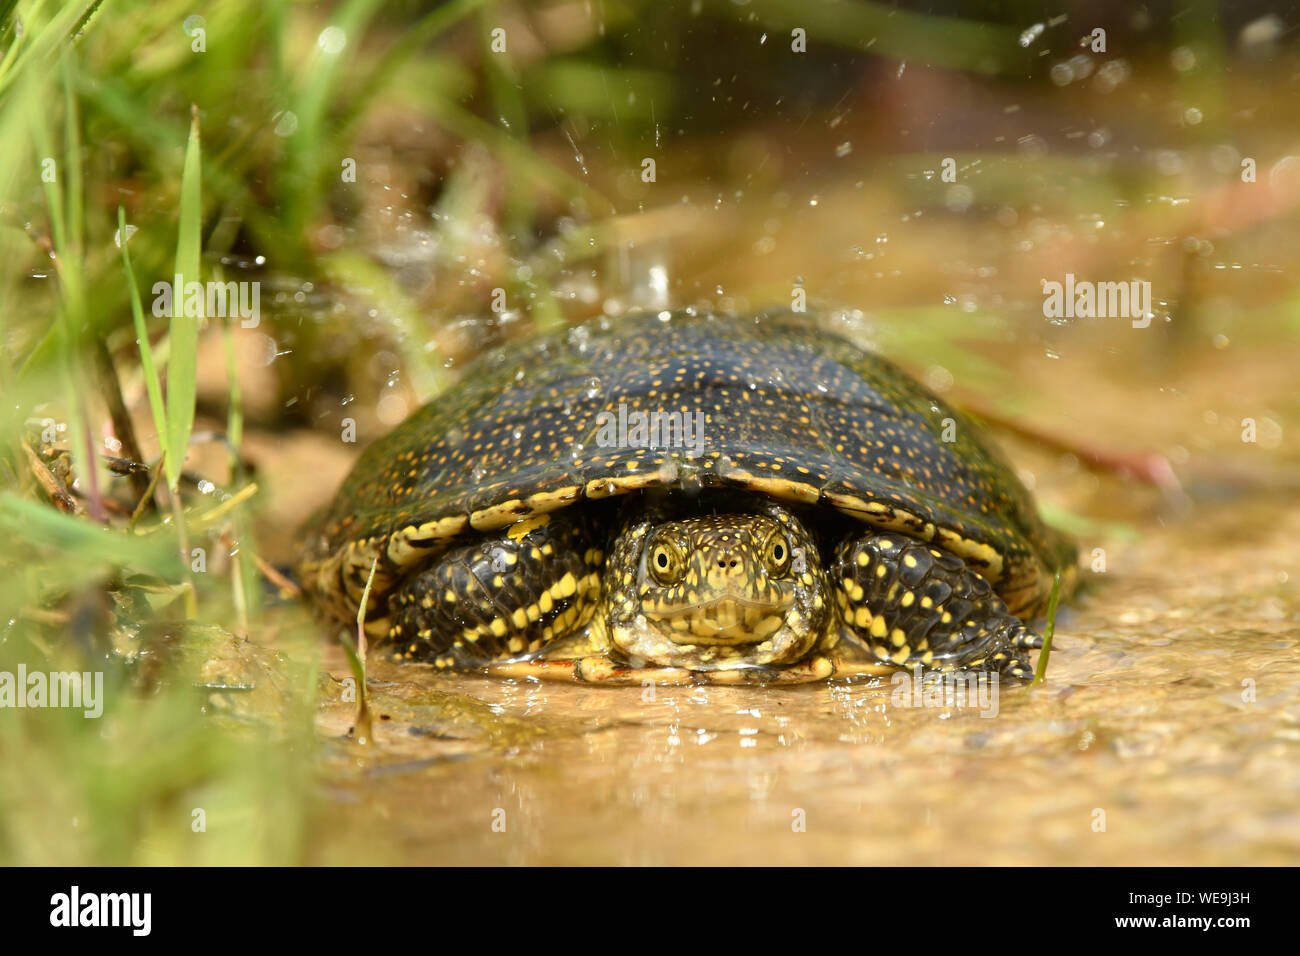 La tortue cistude (Emys orbicularis) reposant dans l'eau peu profonde, la Bulgarie, Avril Banque D'Images